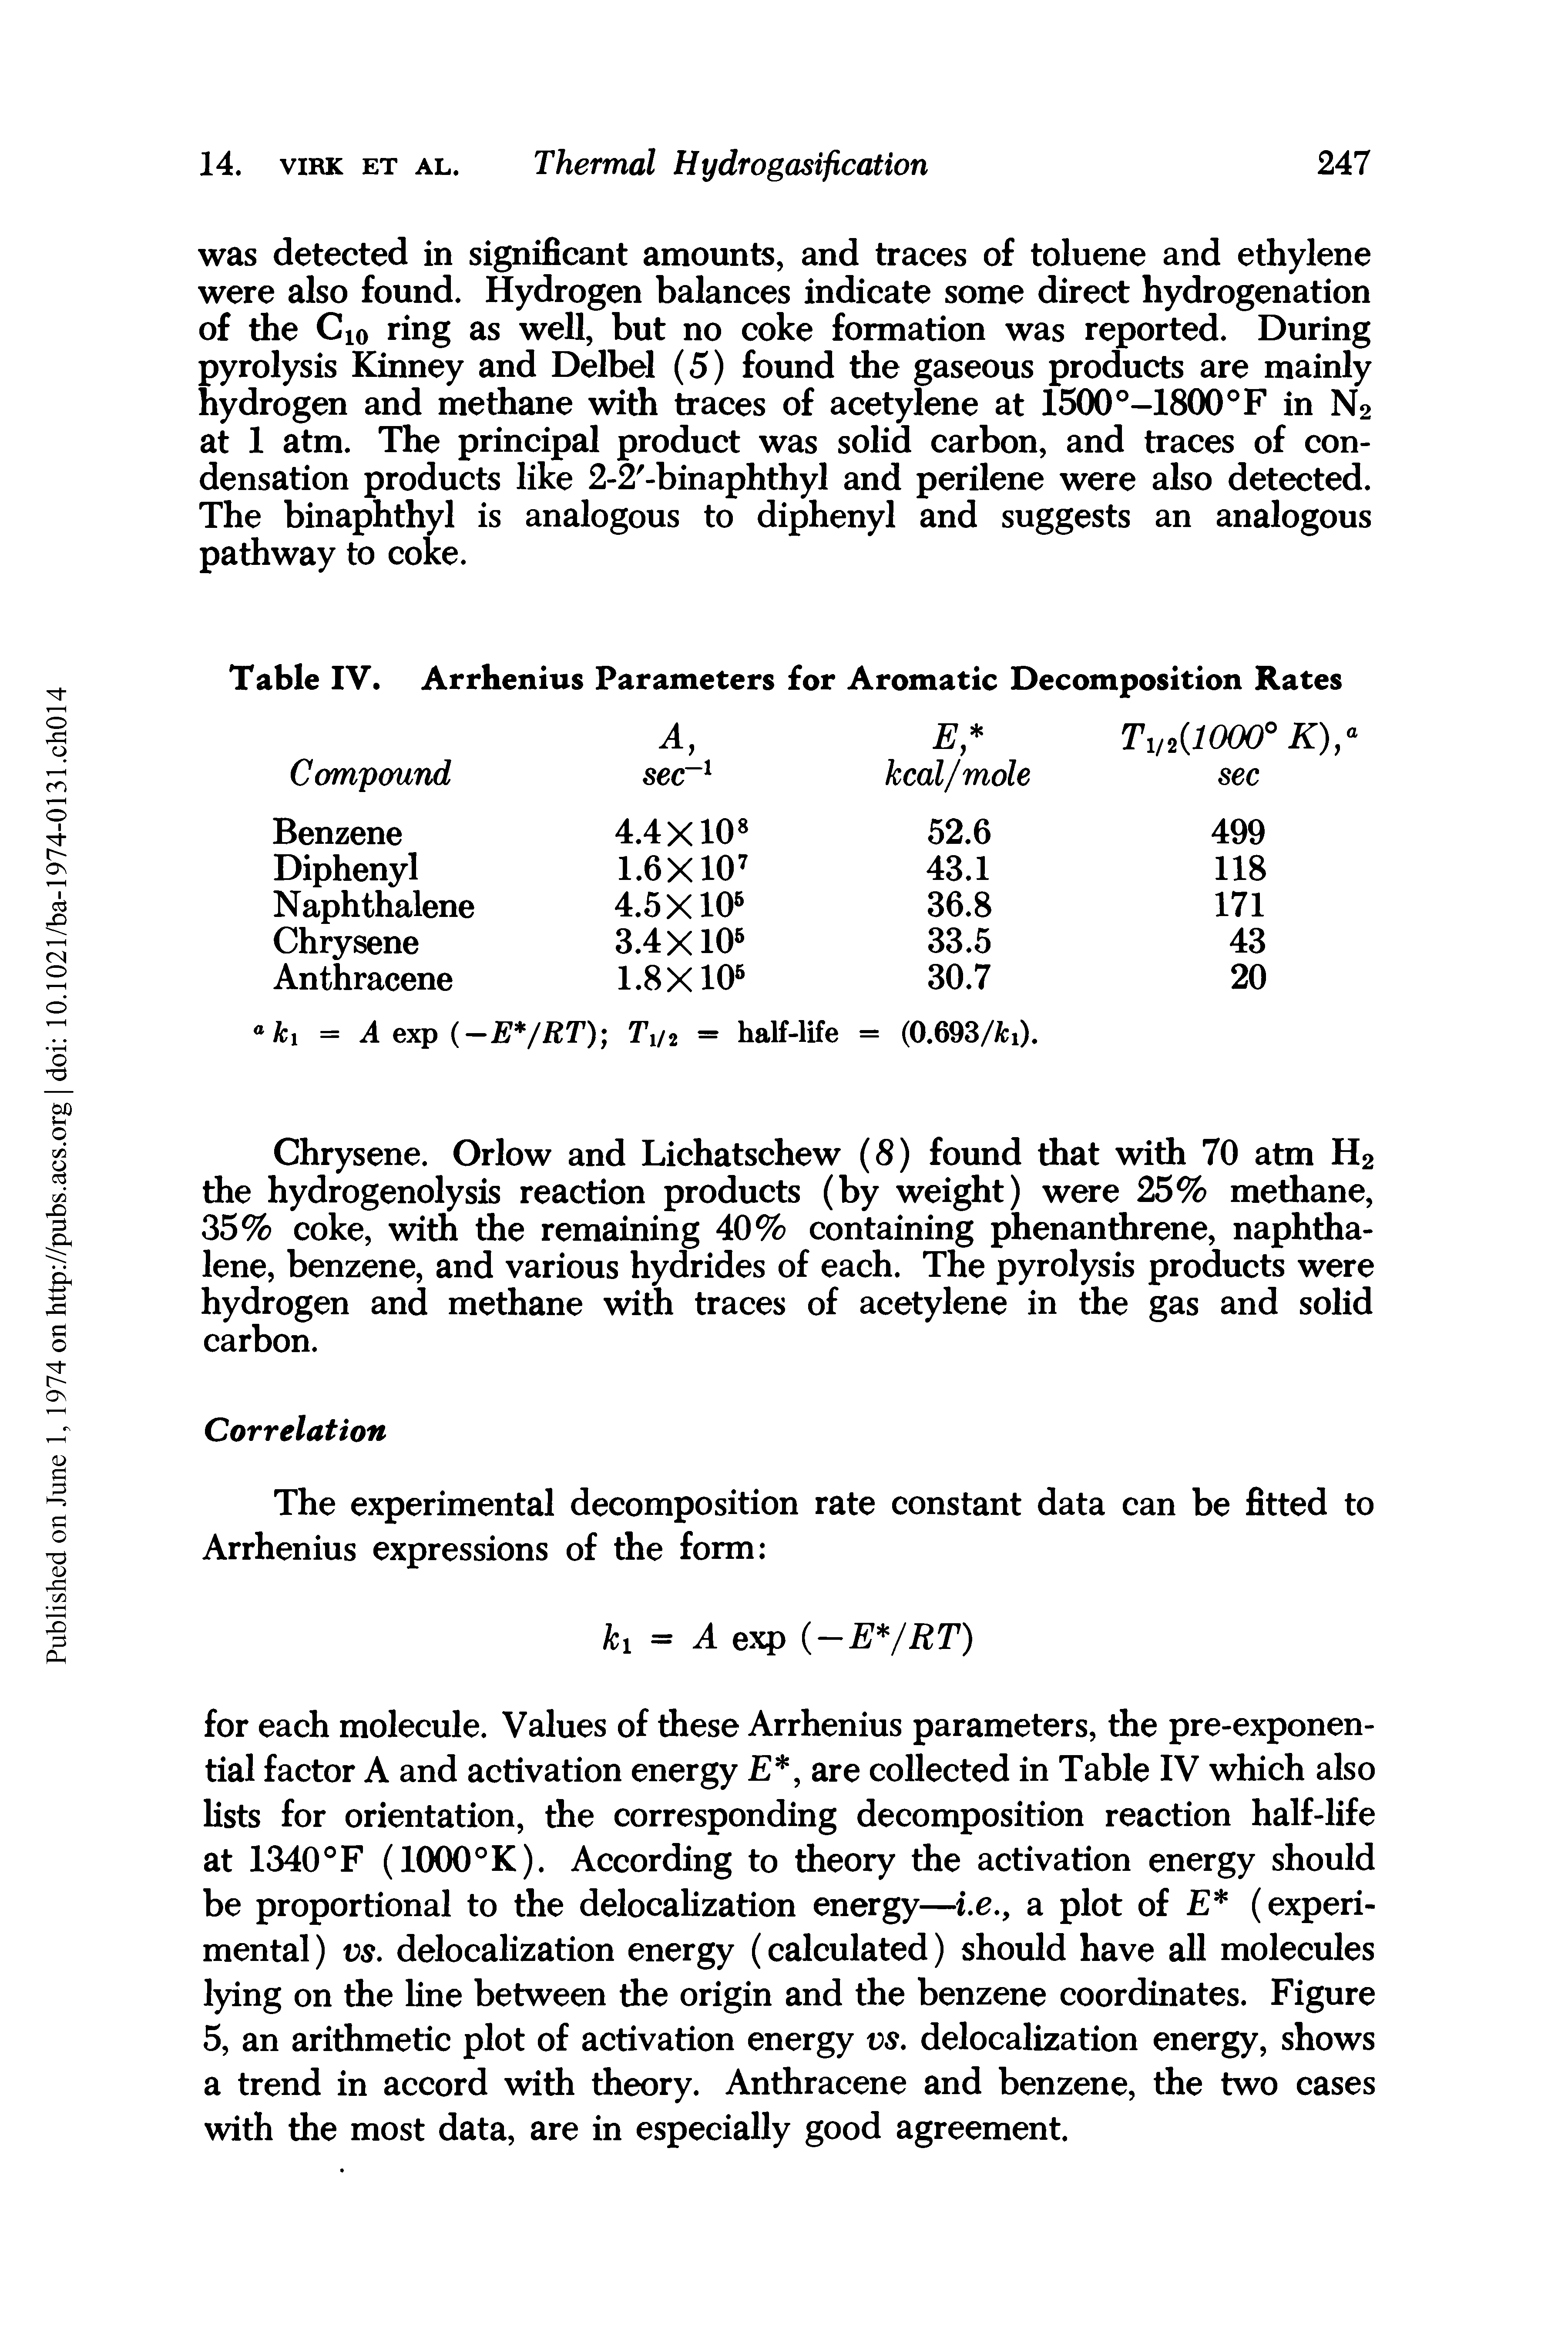 Table IV. Arrhenius Parameters for Aromatic Decomposition Rates...